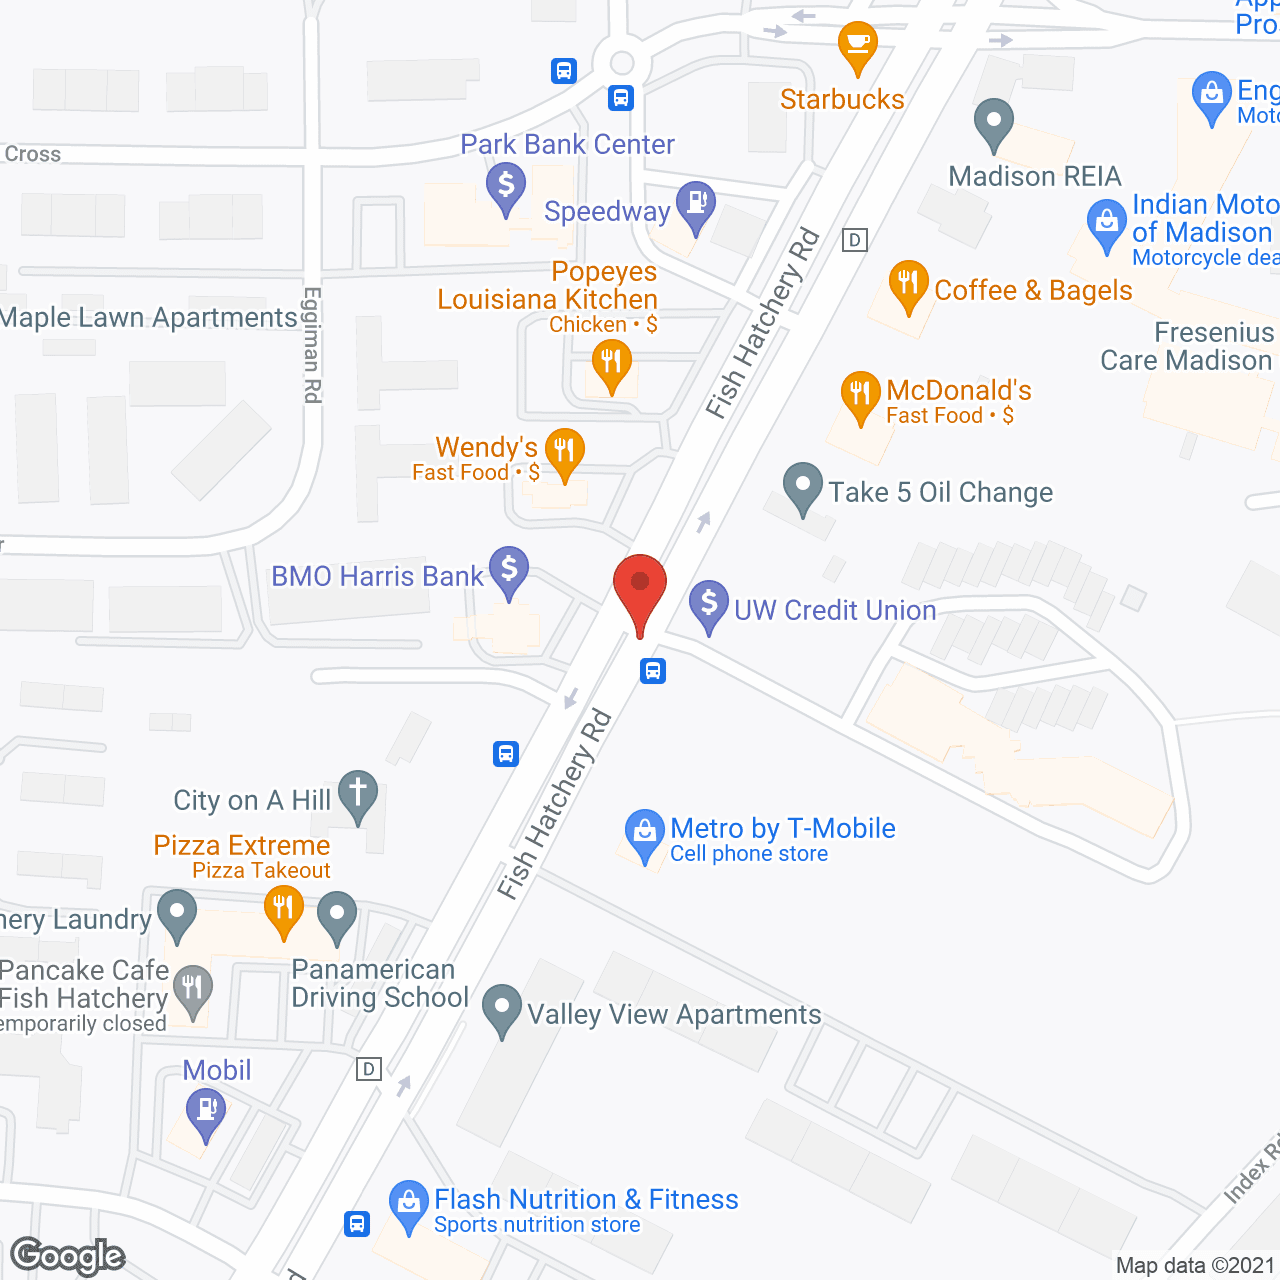 The Ridge at Madison in google map